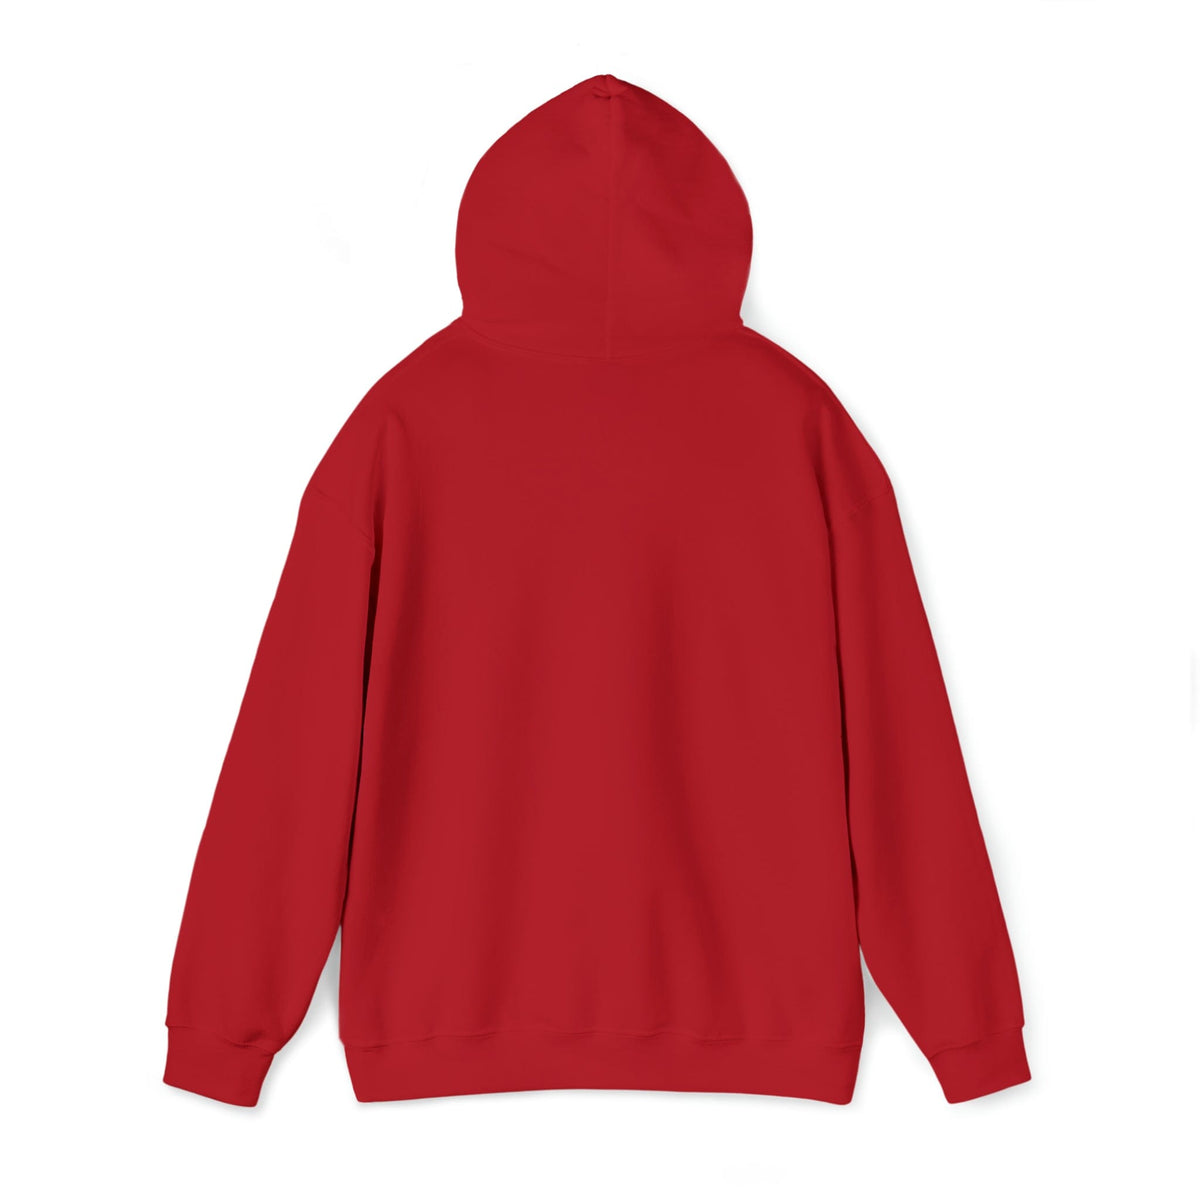 Chest Unisex Heavy Blend™ Hooded Sweatshirt